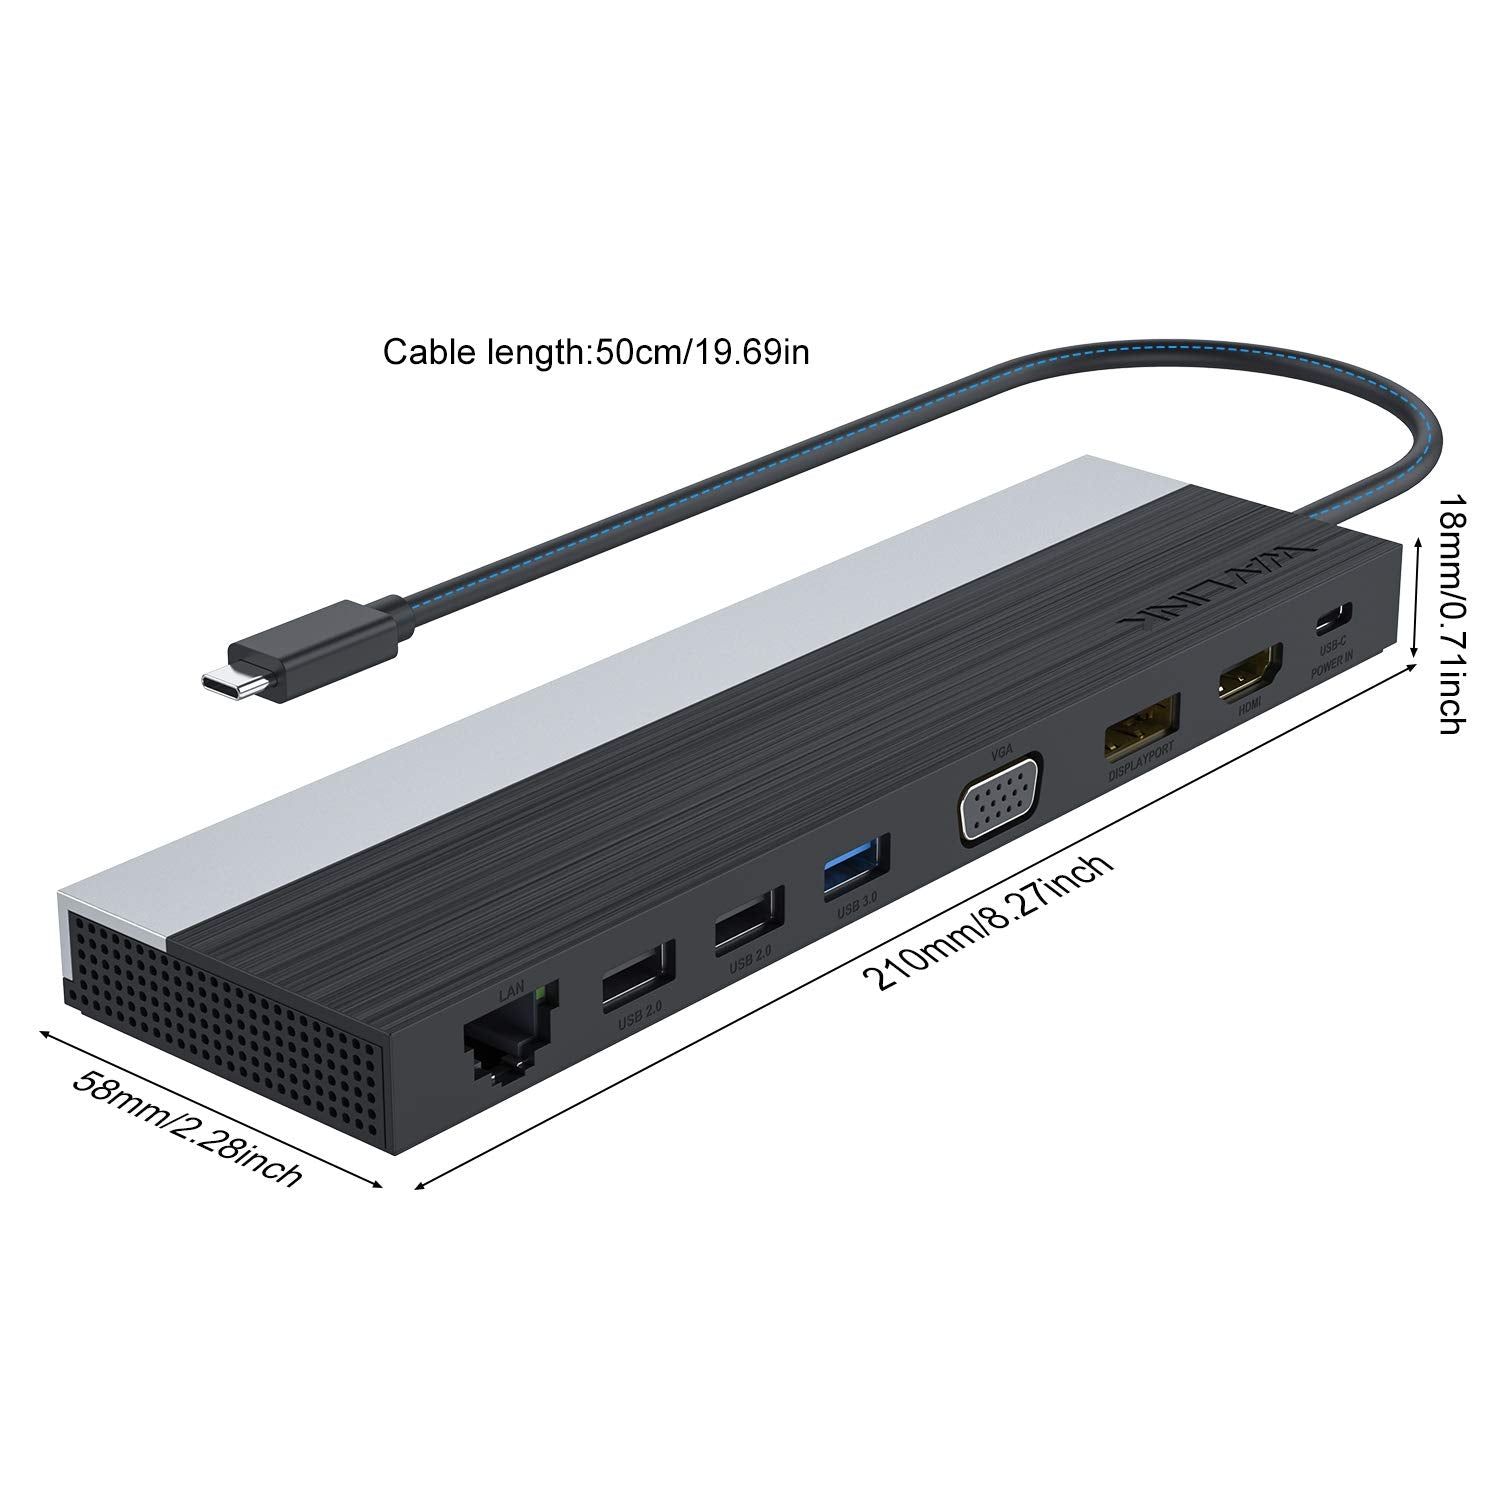 WAVLINK USB C Docking Station,Triple Display Type C Adapter for MacBook Pro,Dell XPS 13/15,HP,Lenovo Yoga(HDMI,DisplayPort,VGA,Ethernet,2 USB 3.0/2.0,SD/TF Card Reader,3.5mm Audio,100W PD3.0)